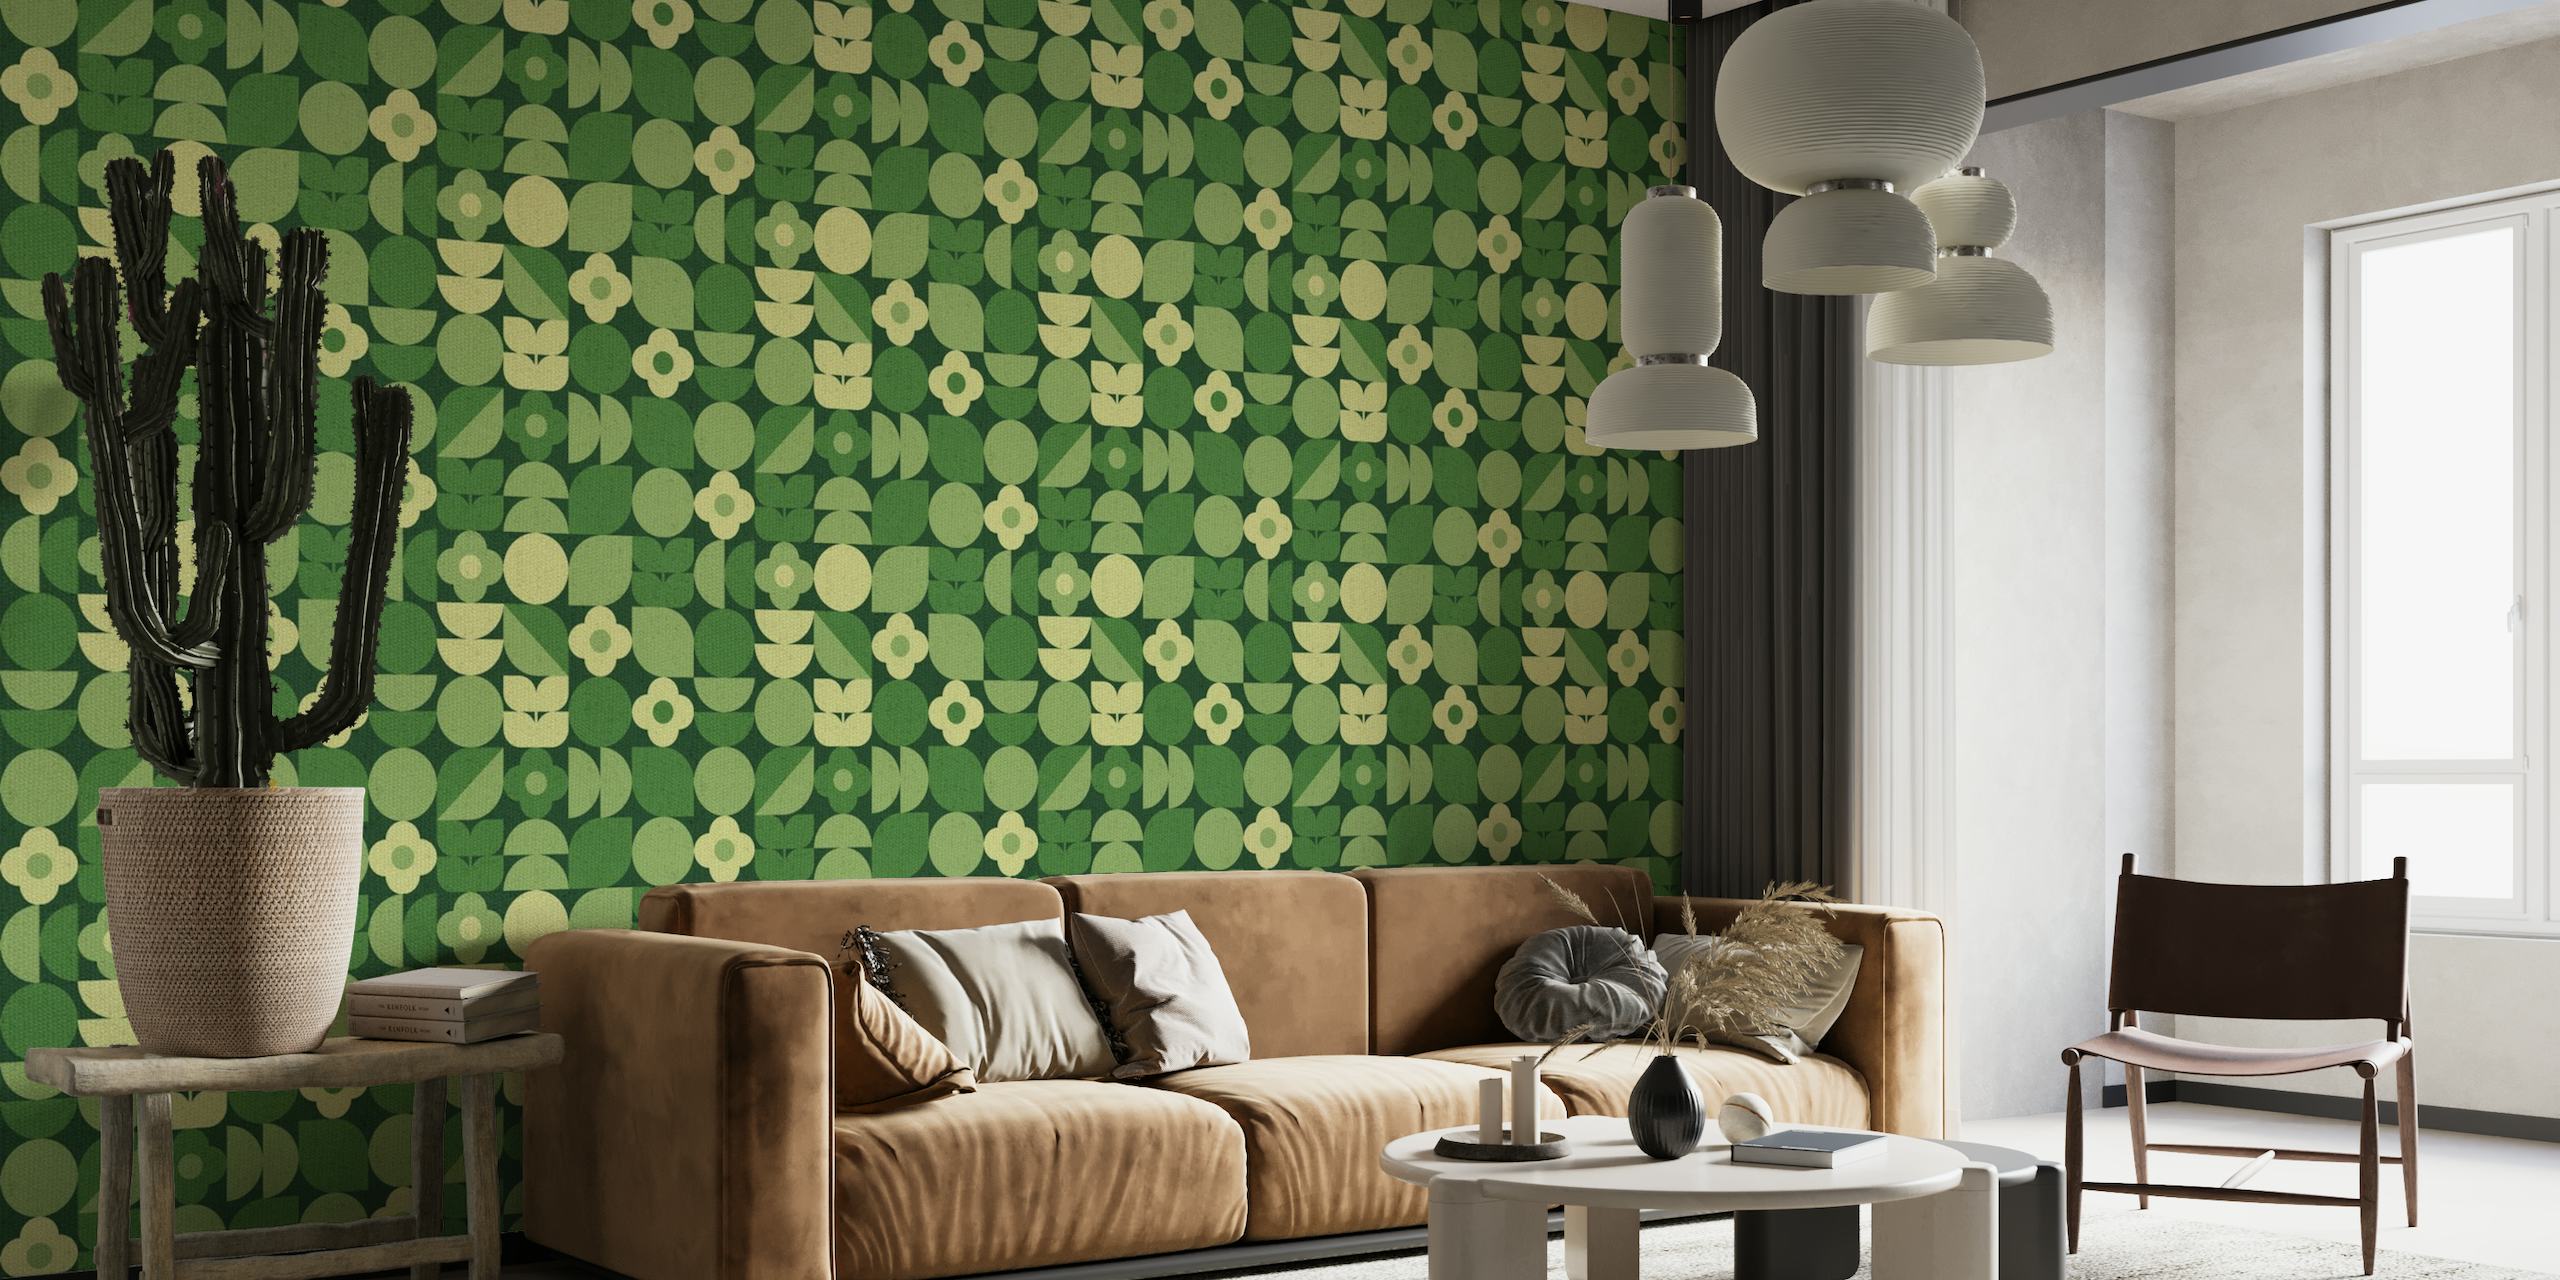 Geo Bauhaus Green Floral Shapes tapete